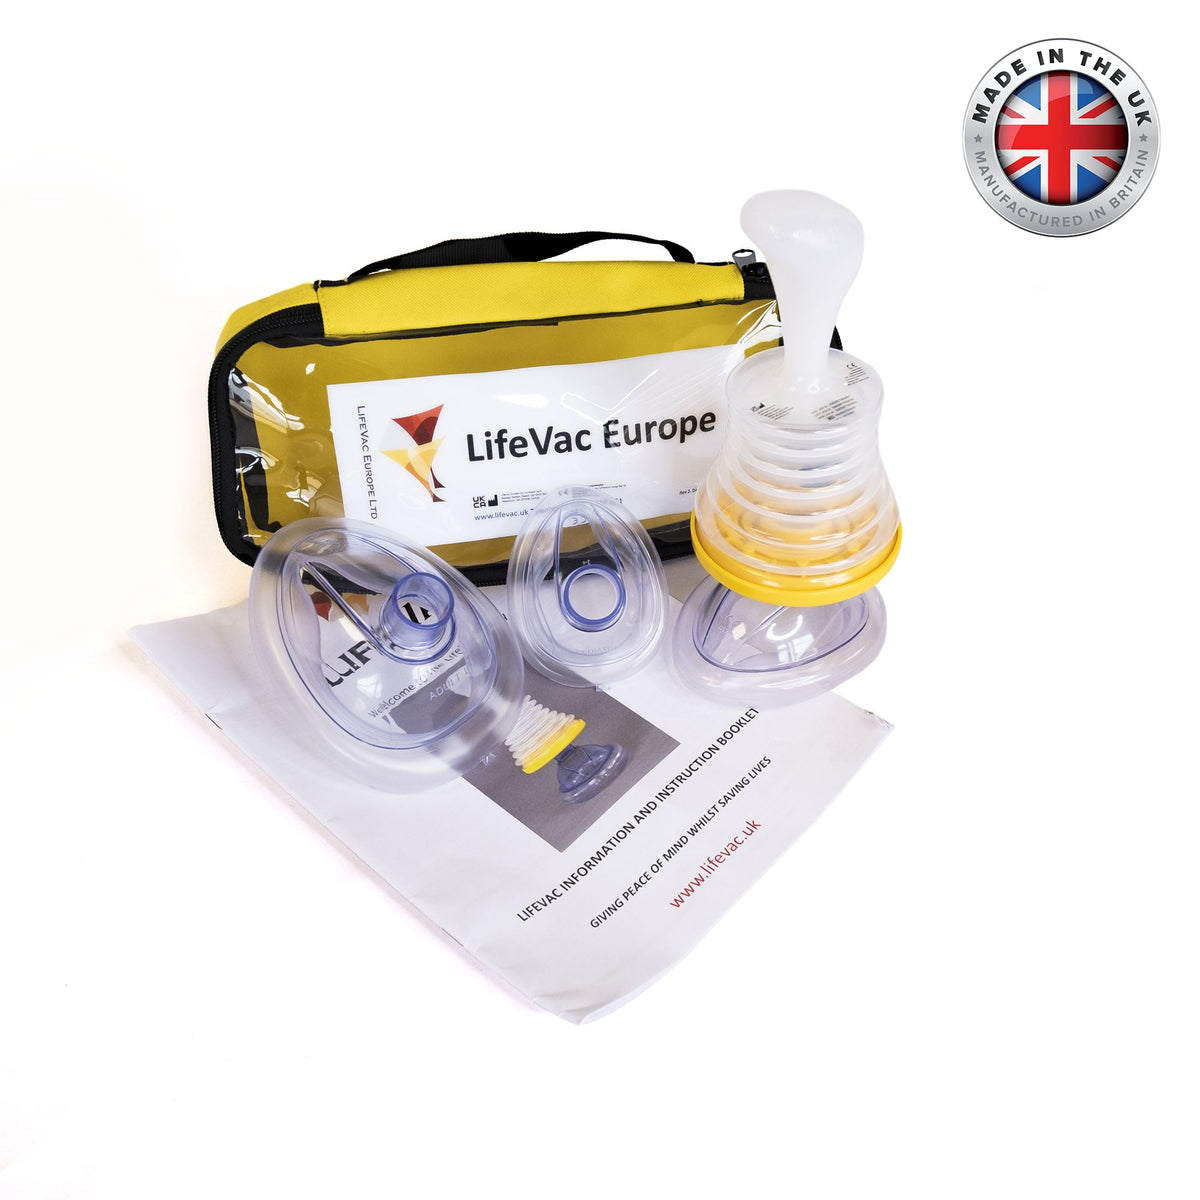 Buy LifeVac® Travel Kit Anti-Choking Device from £60.00 — Hazkit